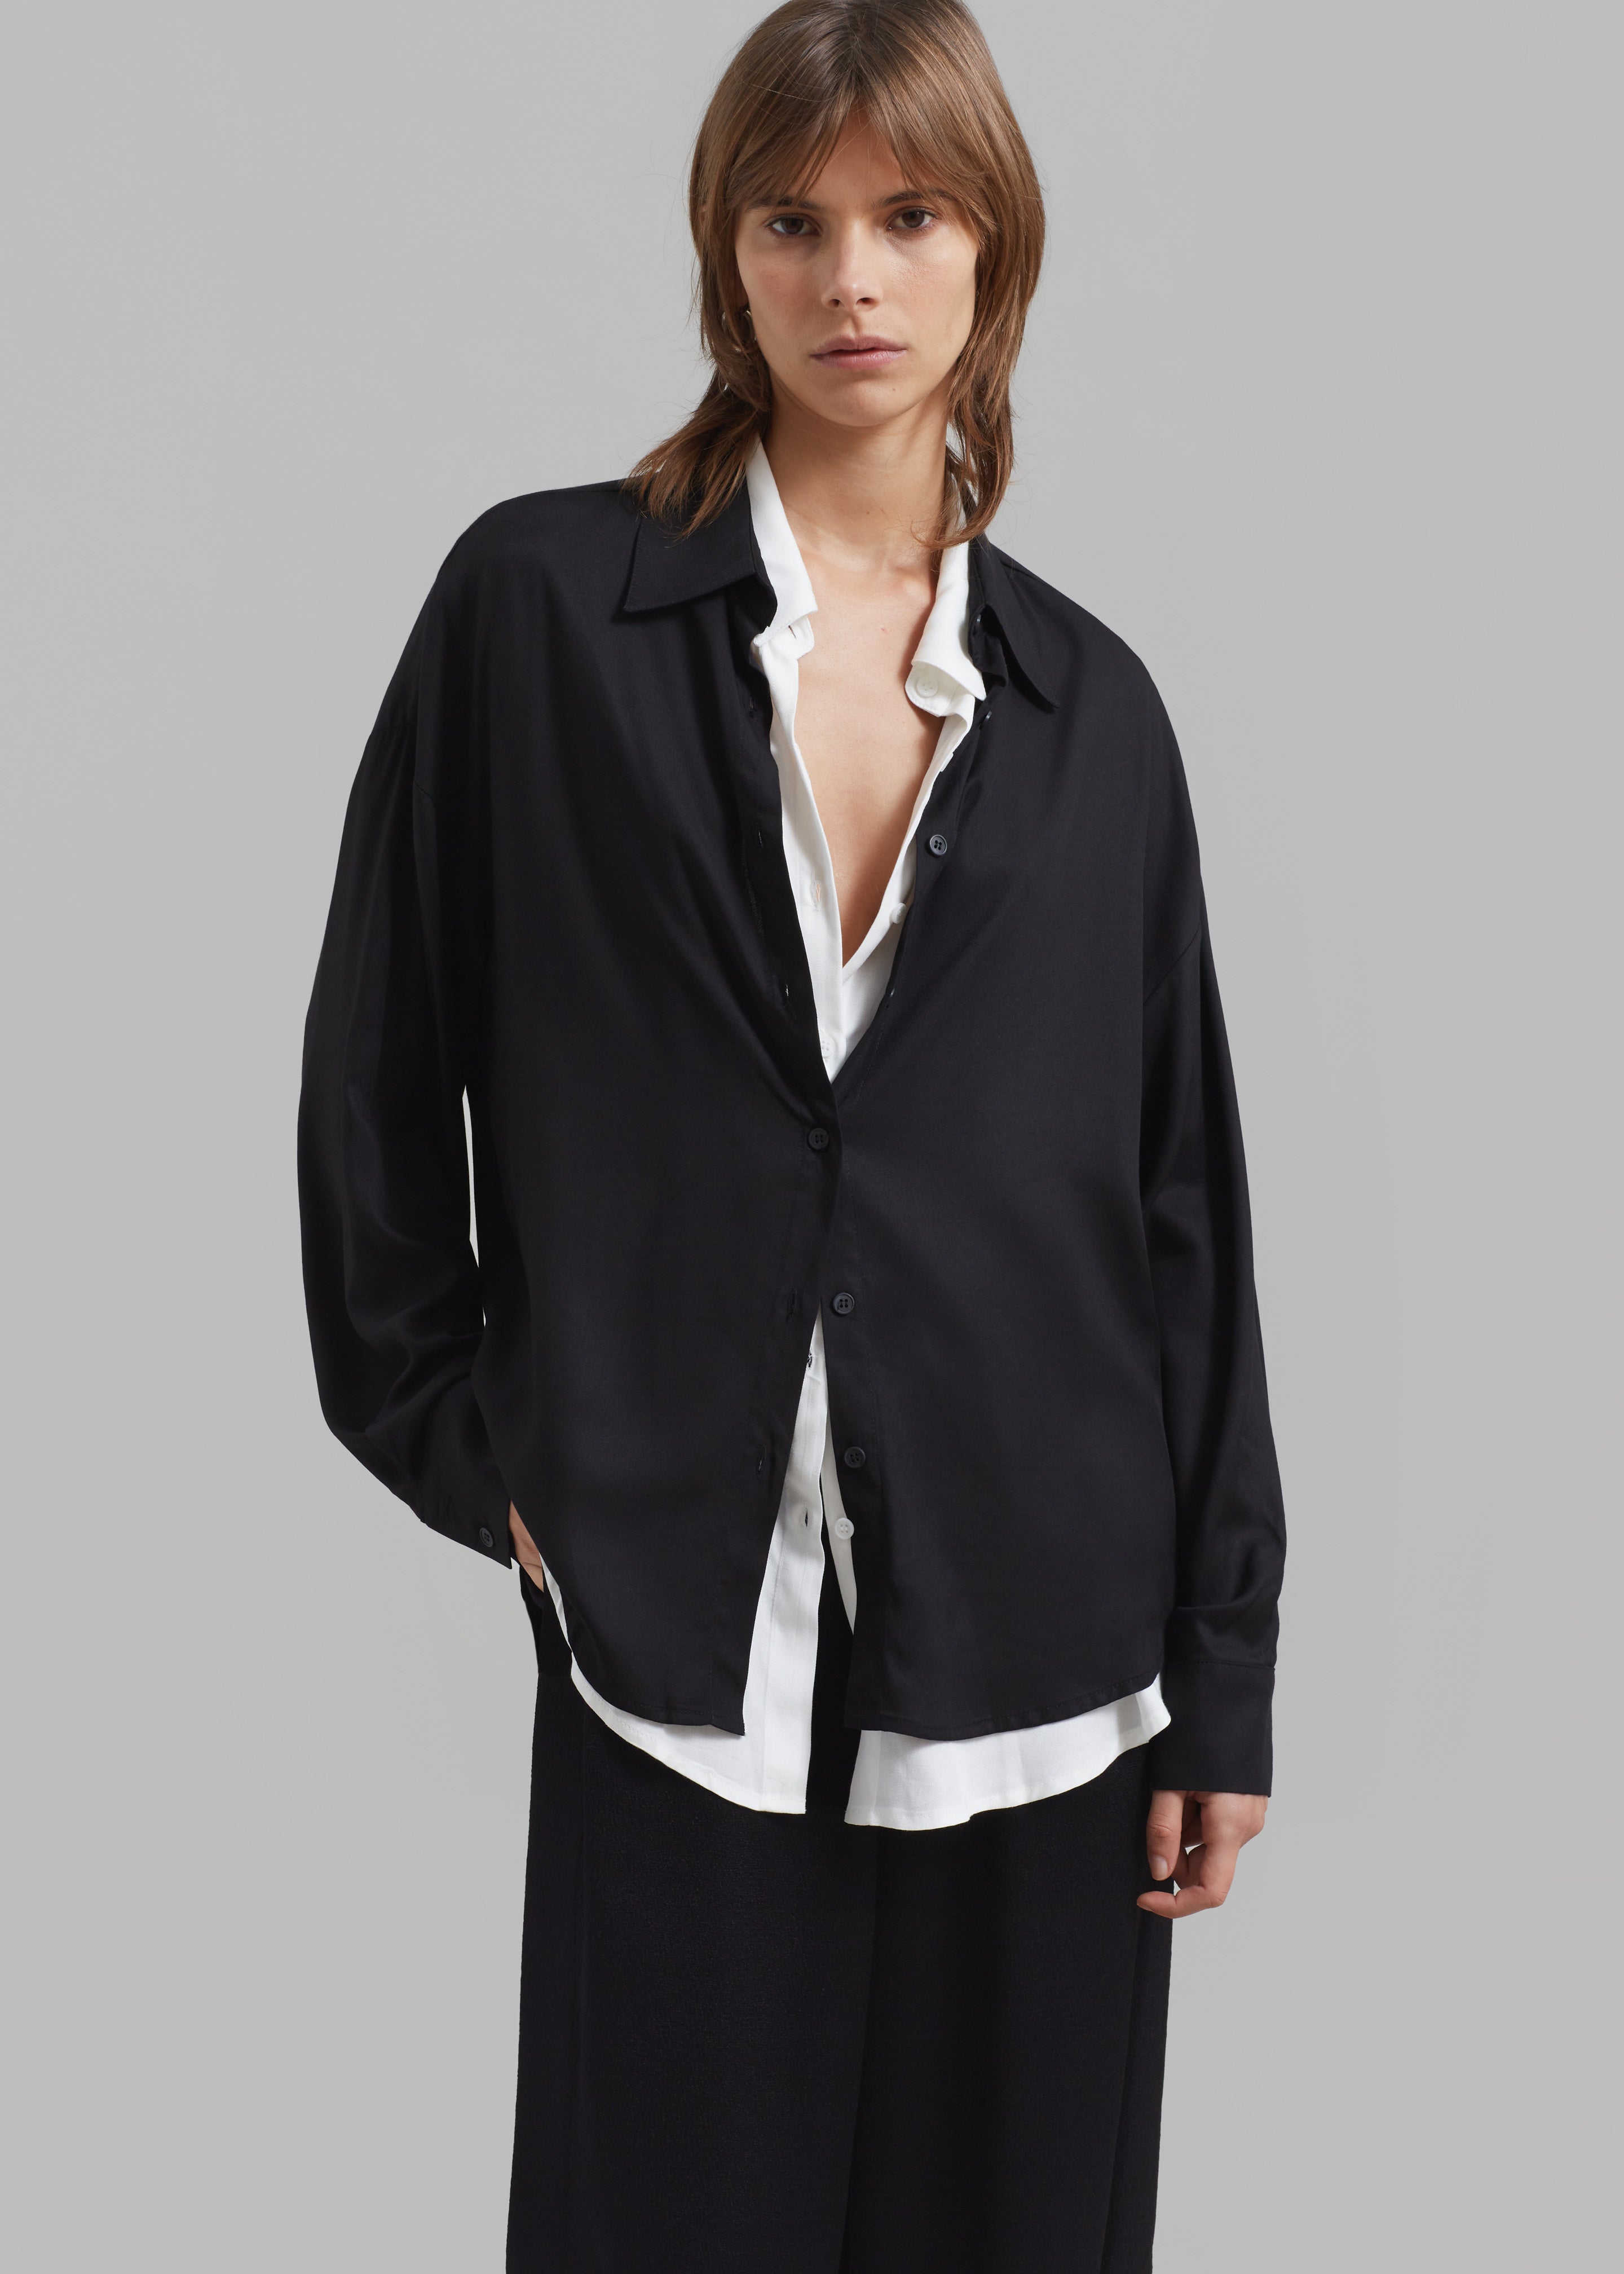 Ann Double Layer Shirt - Black/White – Frankie Shop Europe